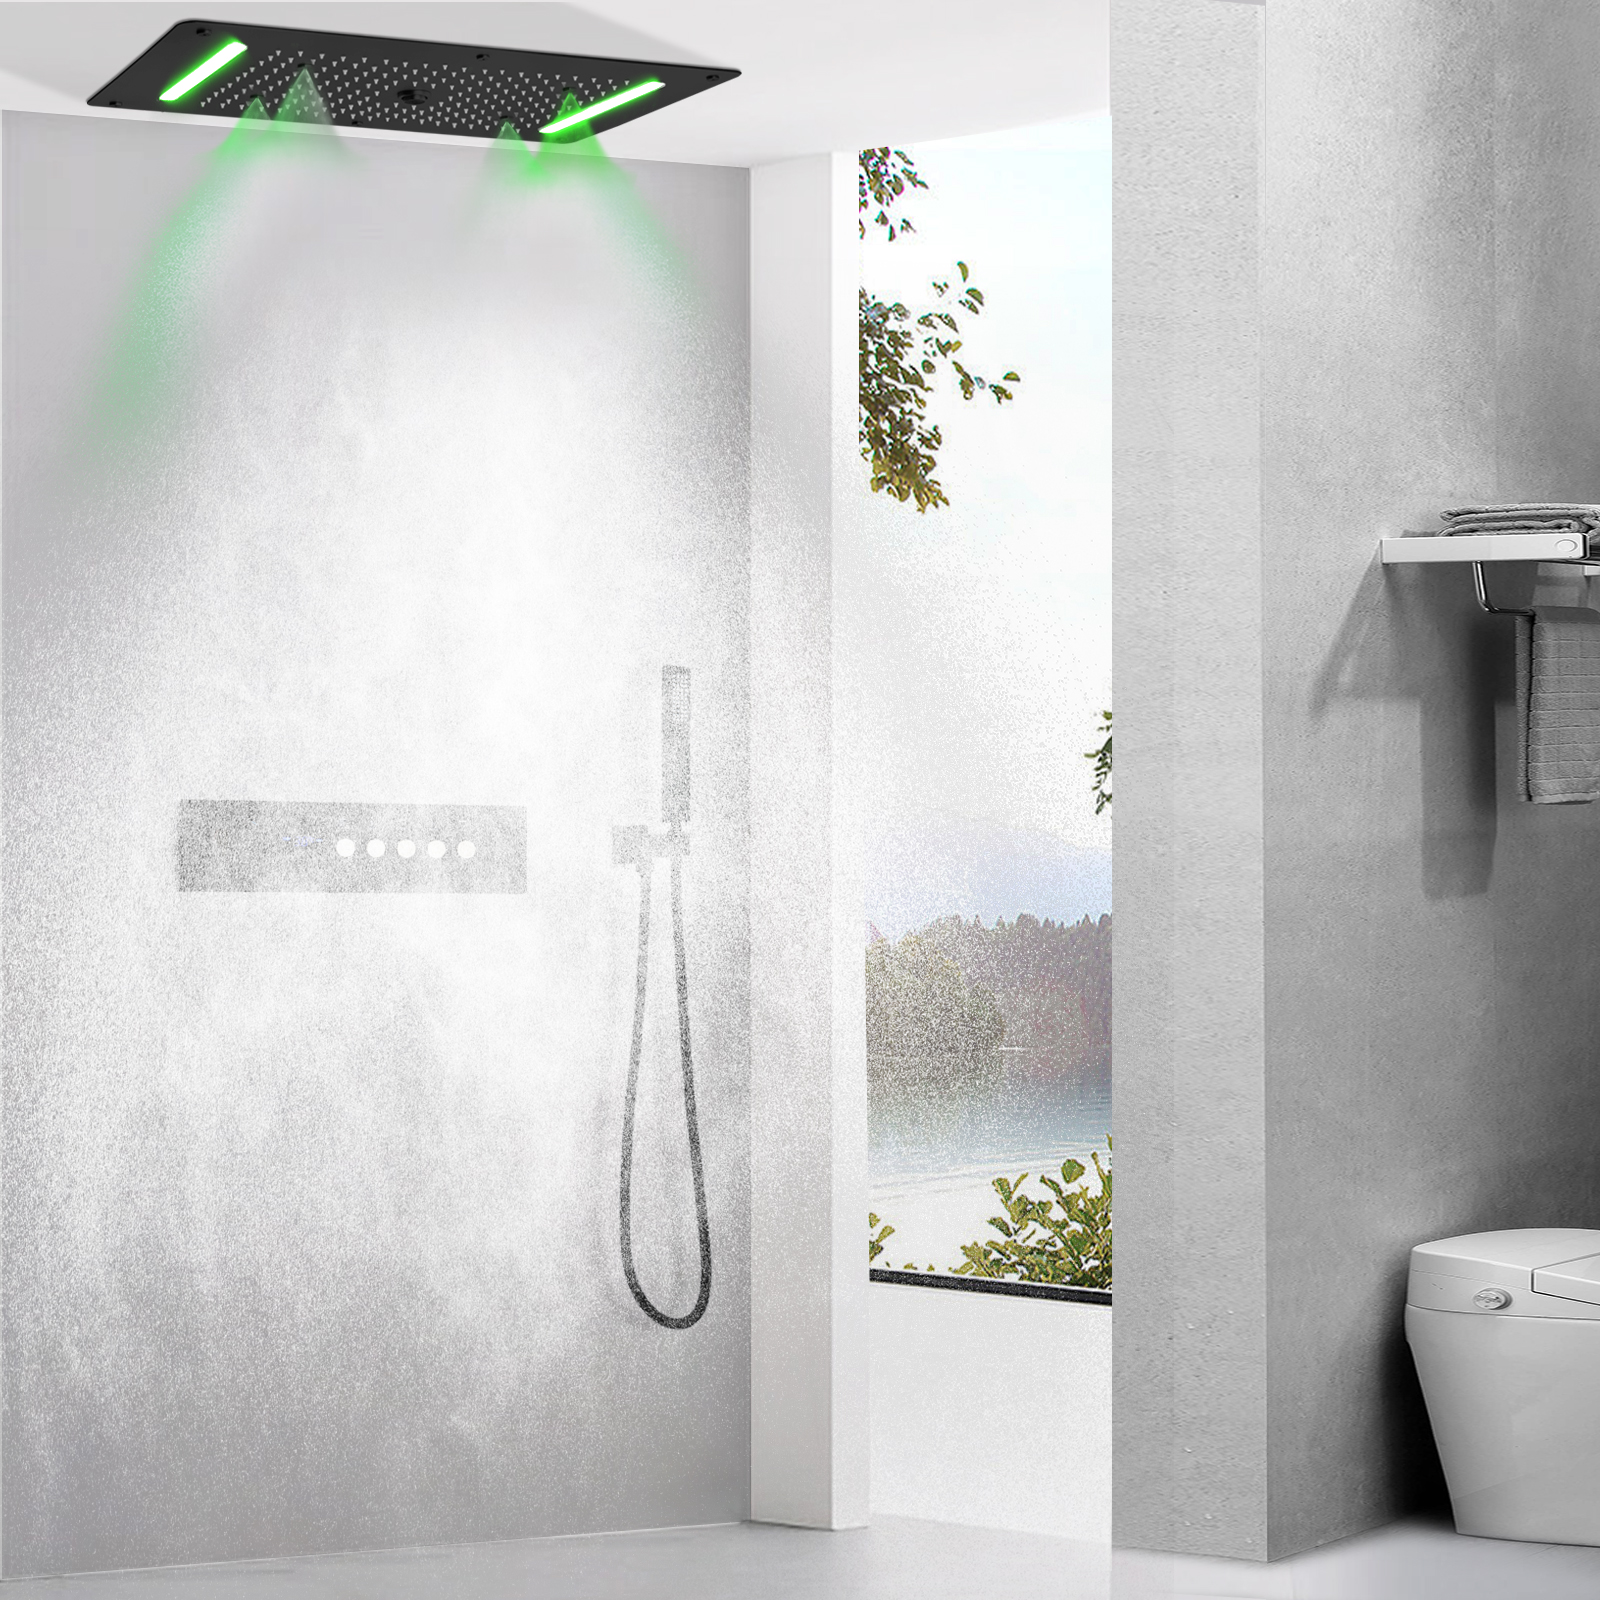 Sistema de ducha de lluvia y niebla, cascada oscura mate, pantalla Digital LED, válvula de ducha termostática, juego de ducha de SPA, grifo